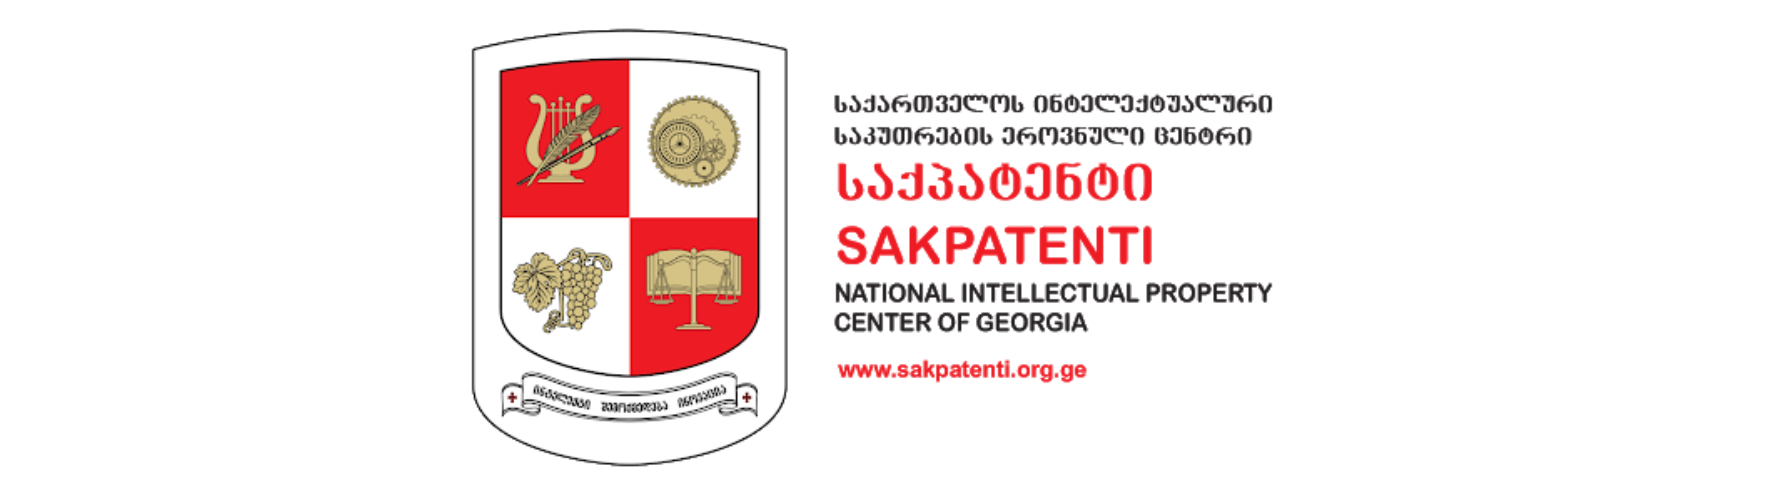 Sakpatenti logo